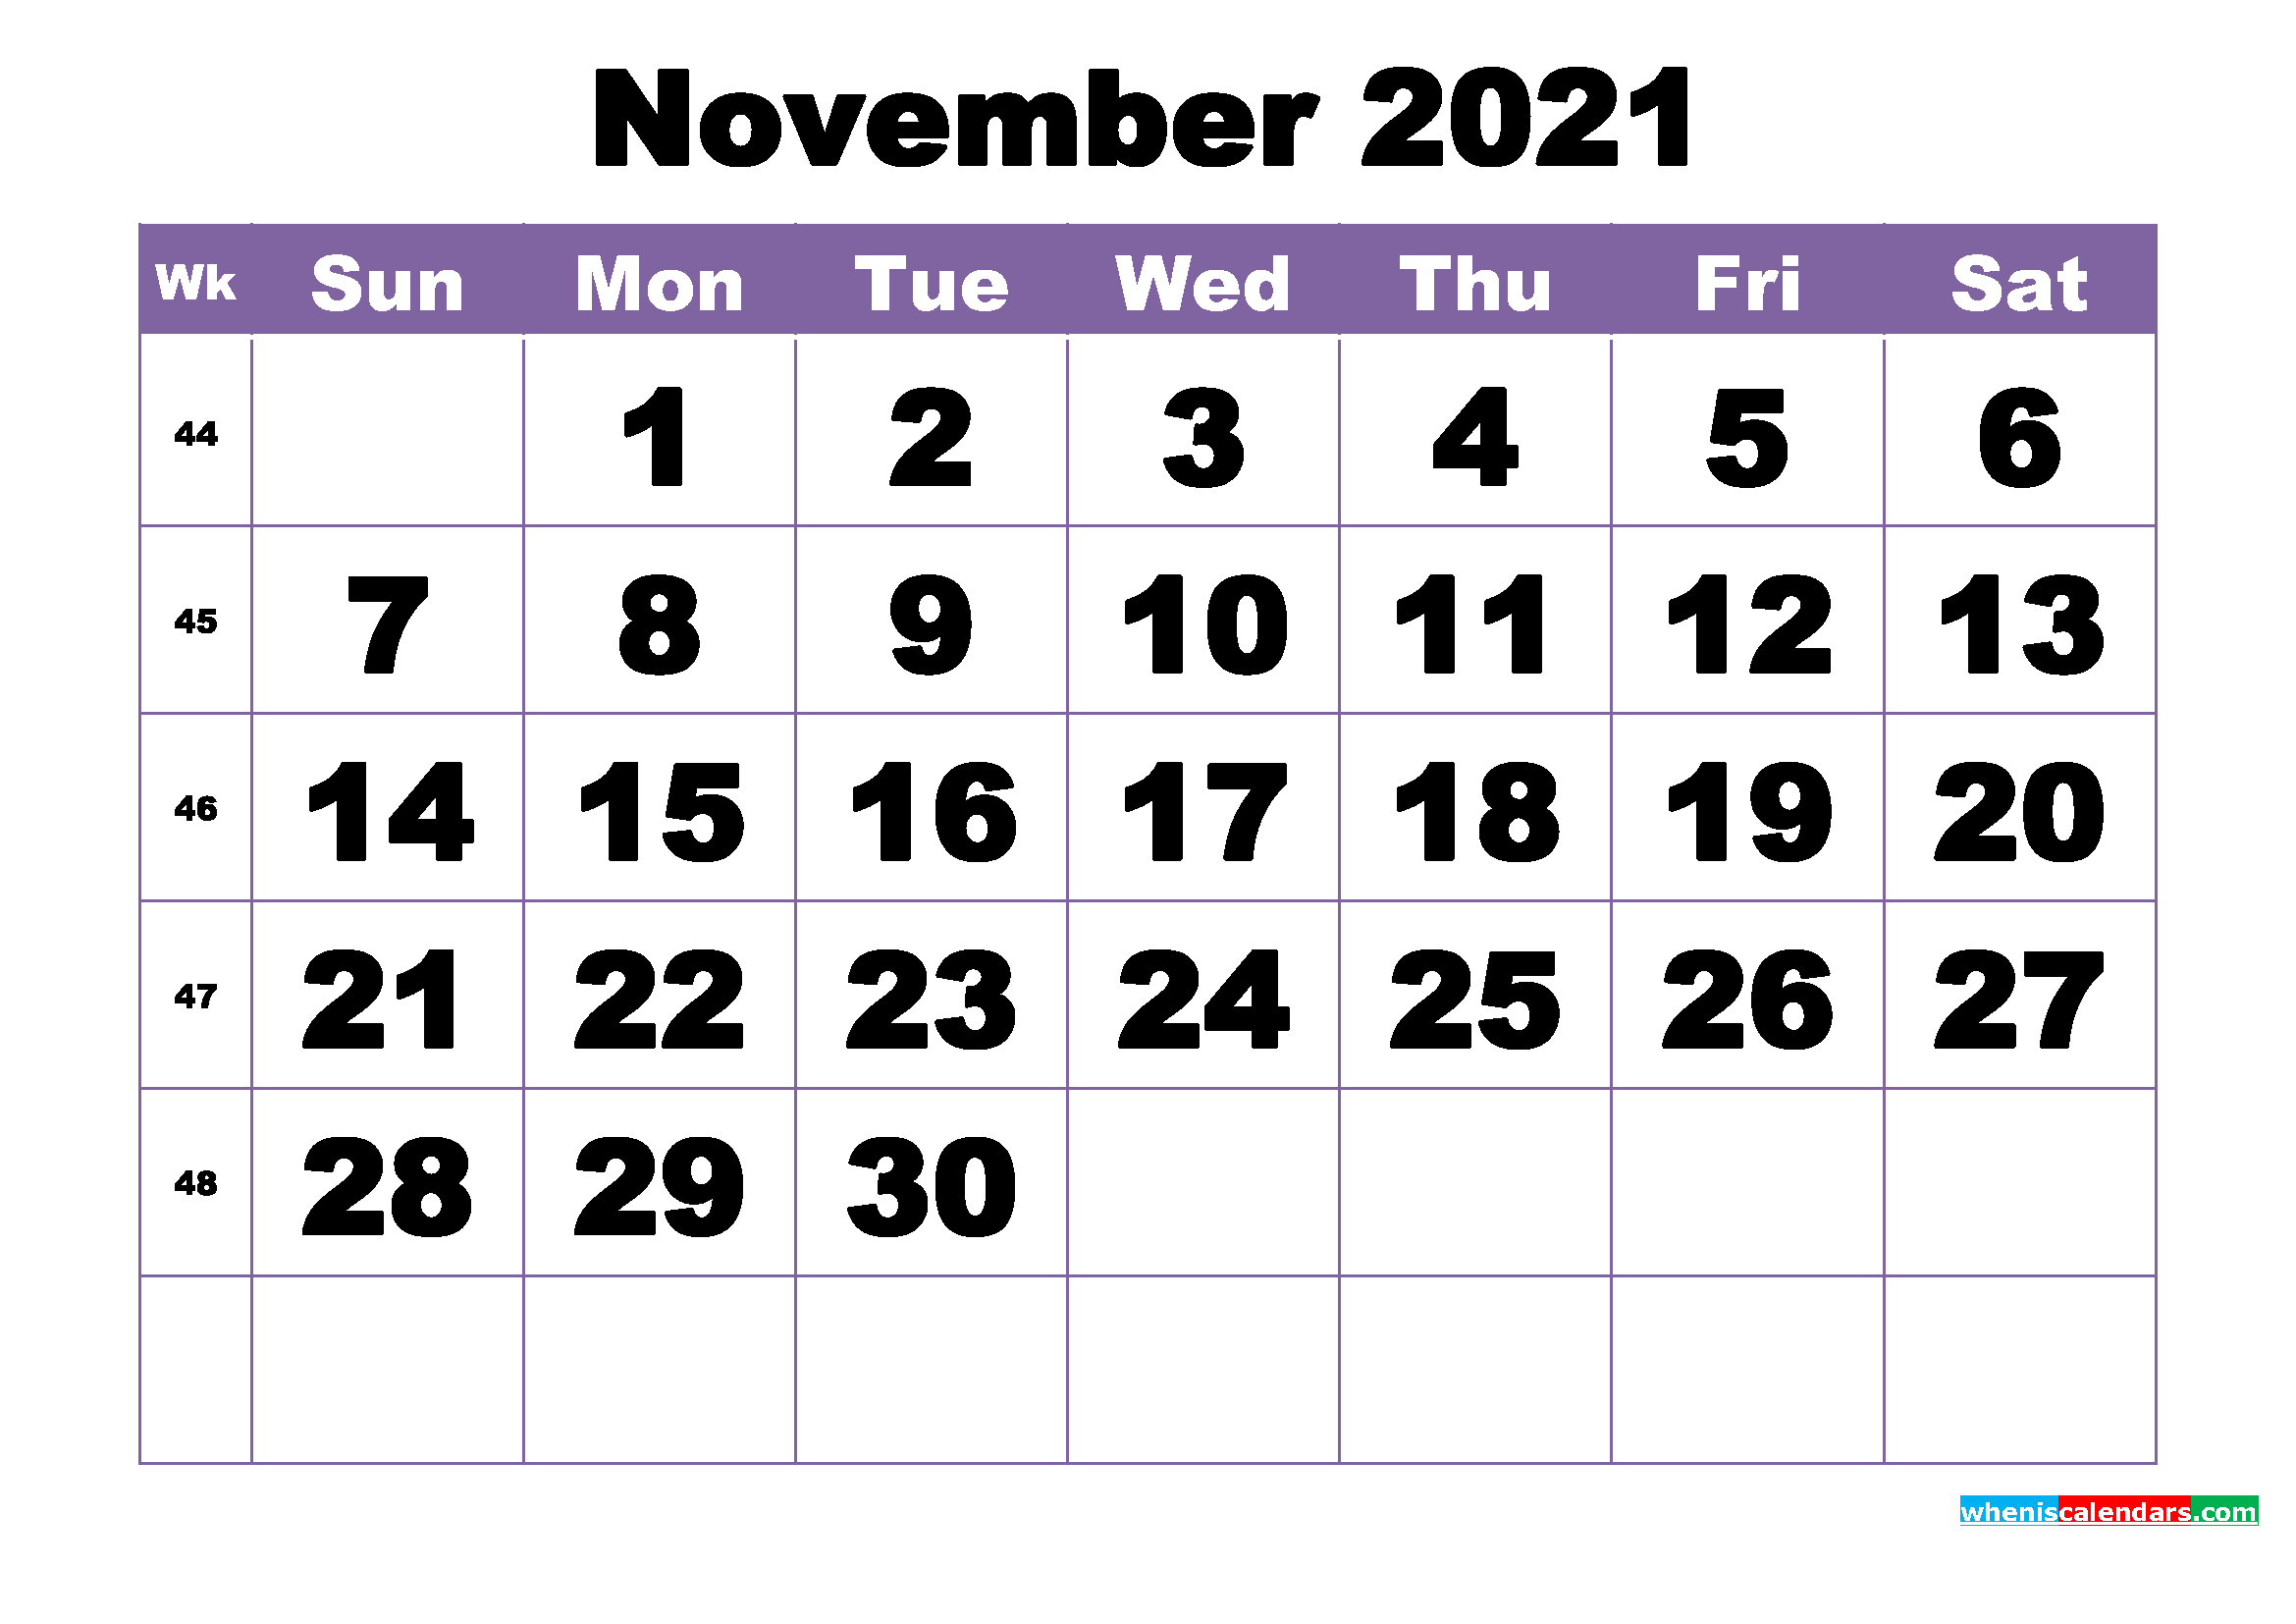 November 2021 Printable Calendar Template | Free Printable ...